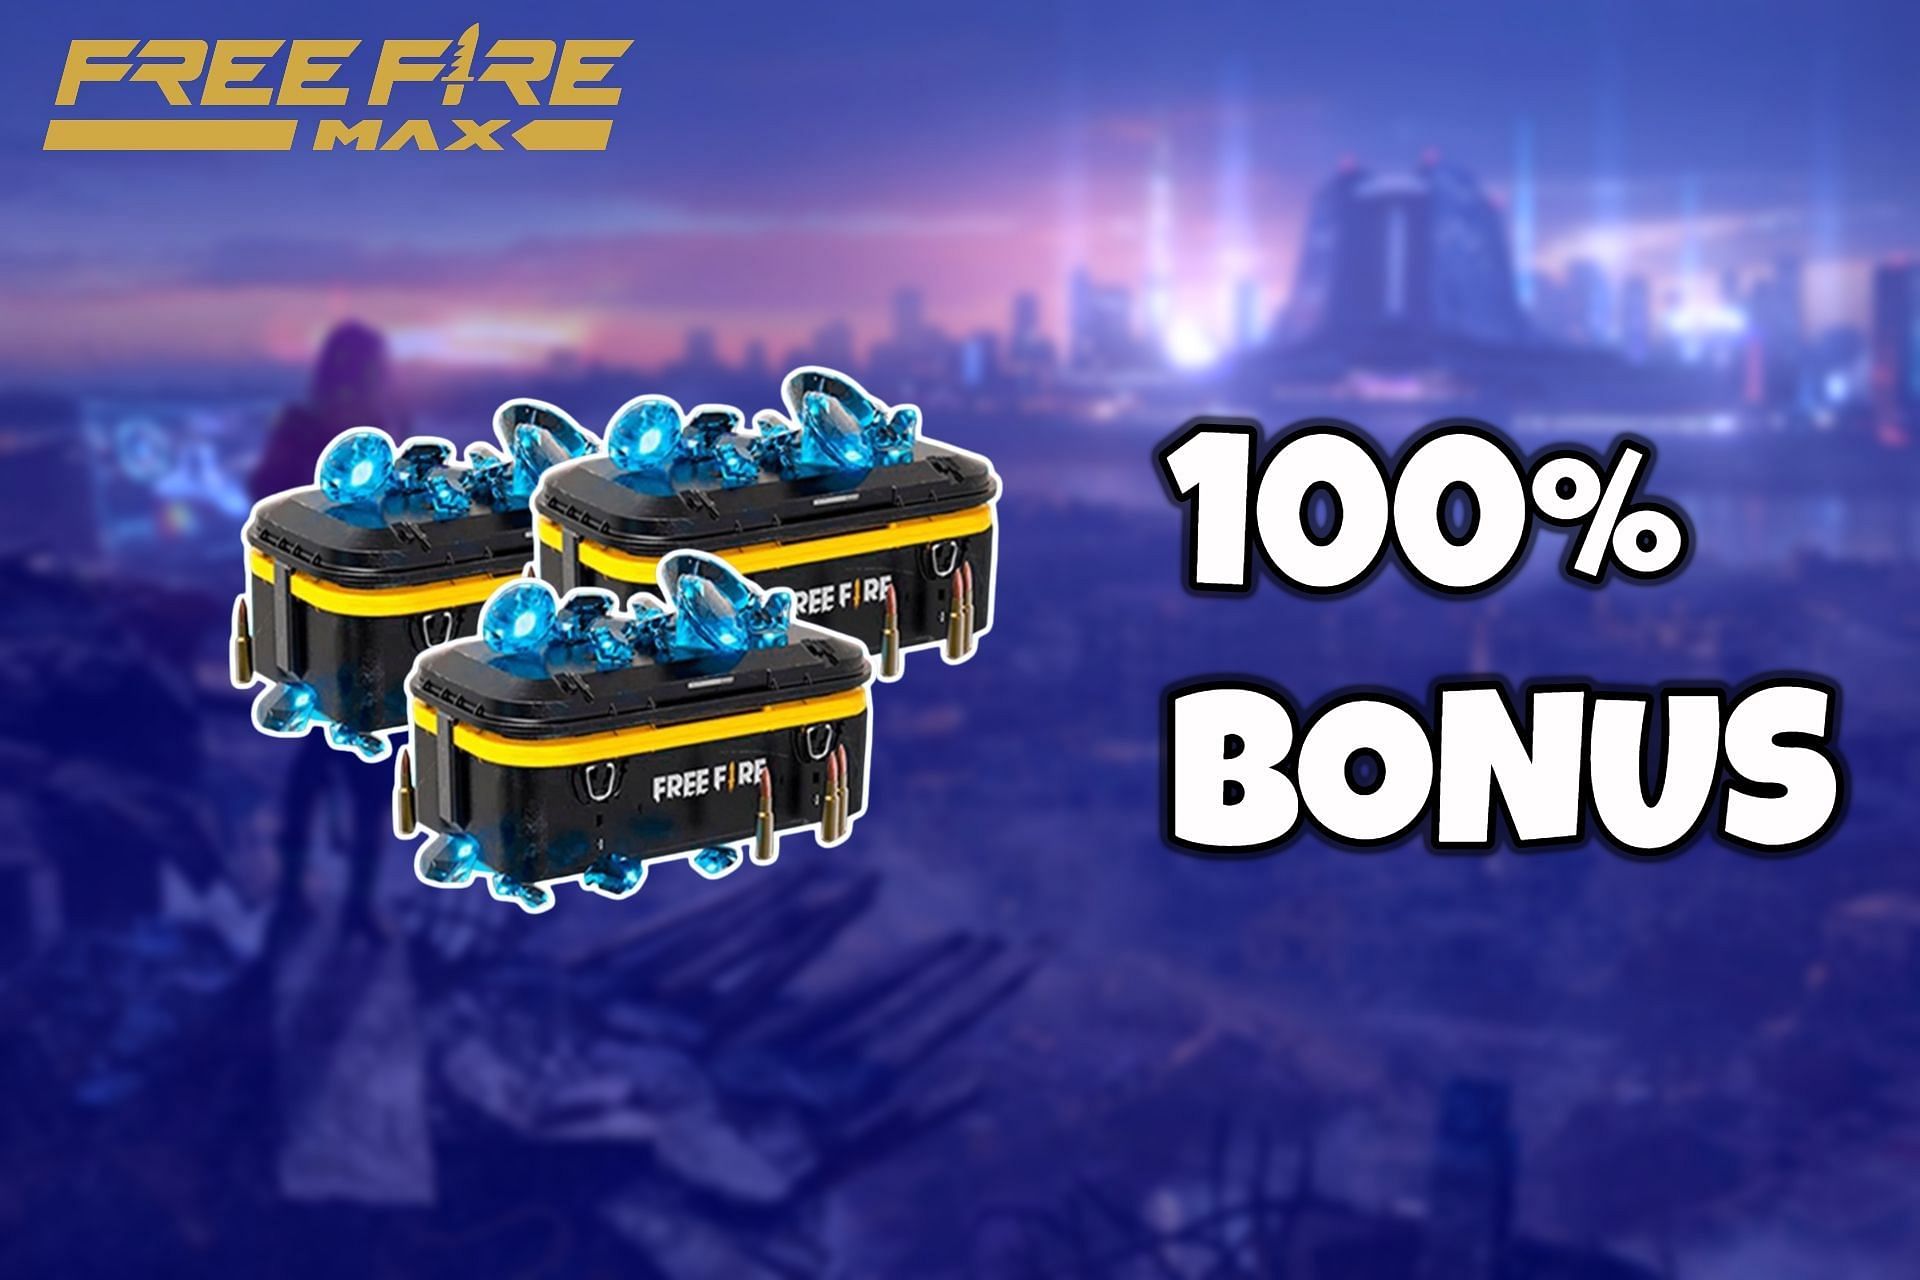 Users can currently get 100% bonus diamonds in Free Fire MAX (Image via Sportskeeda)